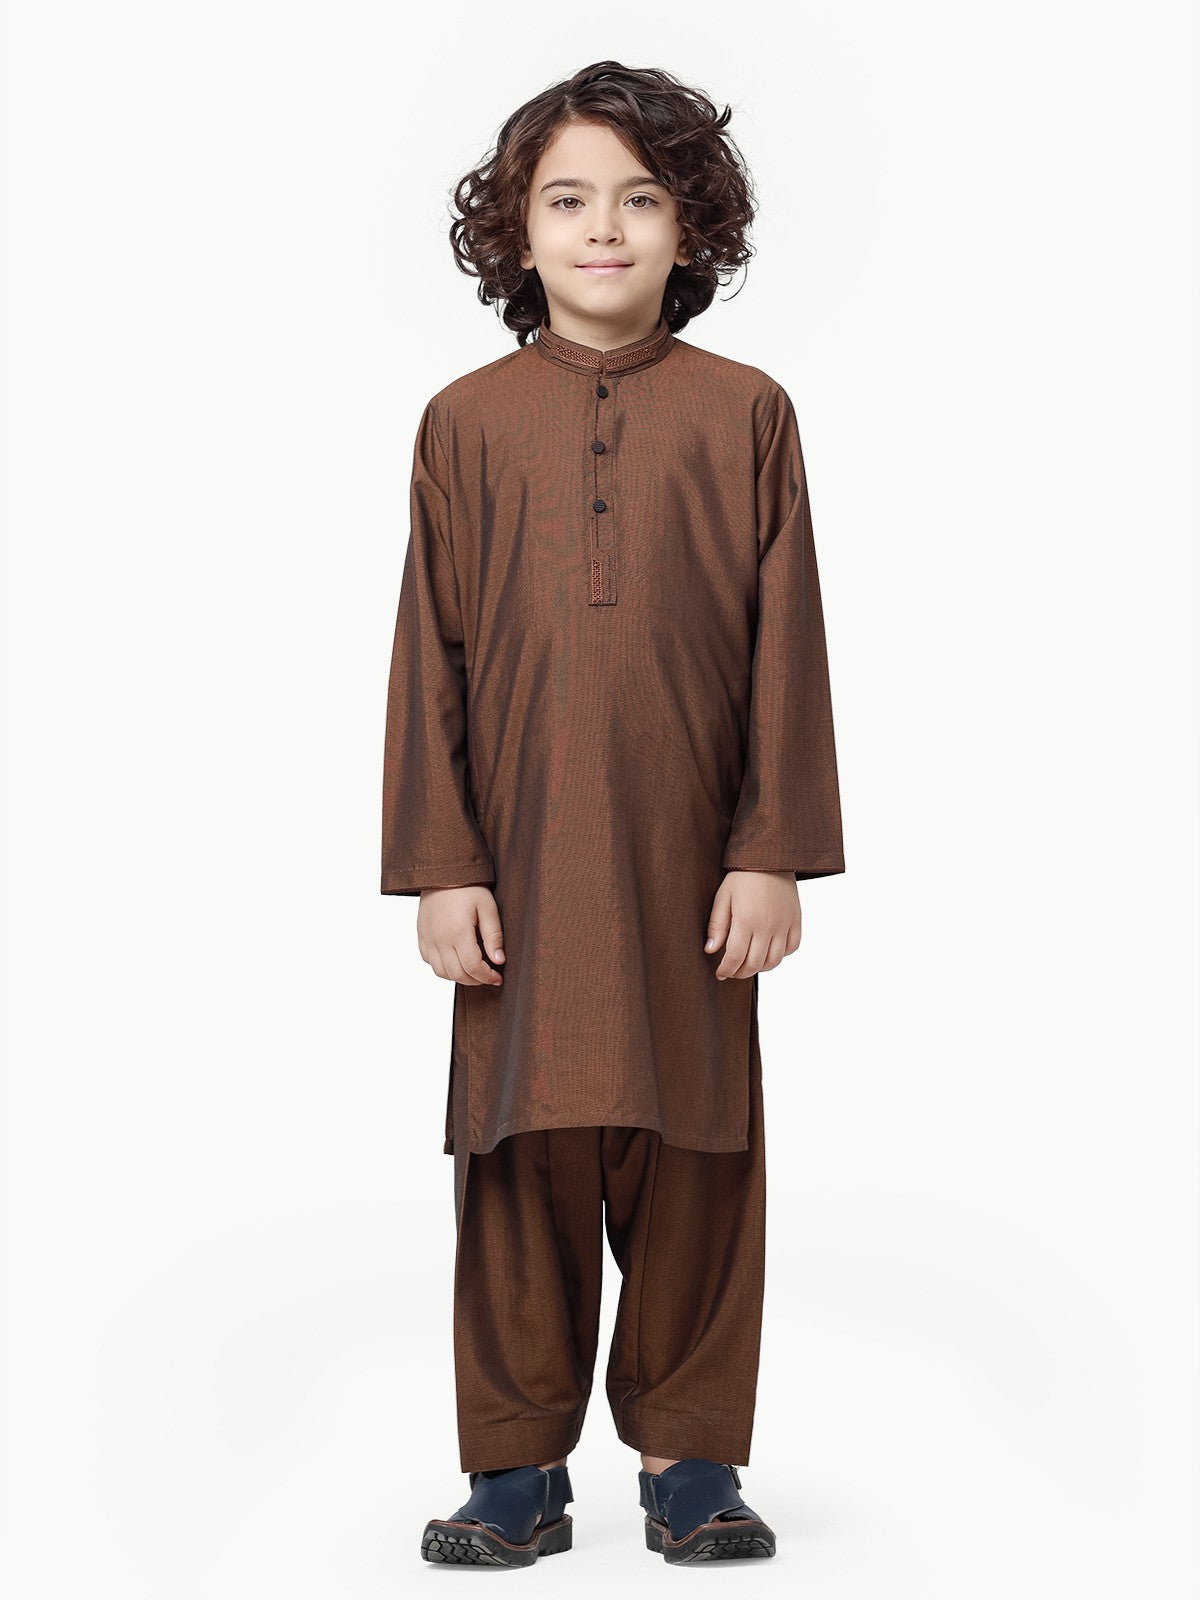 Boy's Brown Kurta Shalwar - EBTKS23-3860